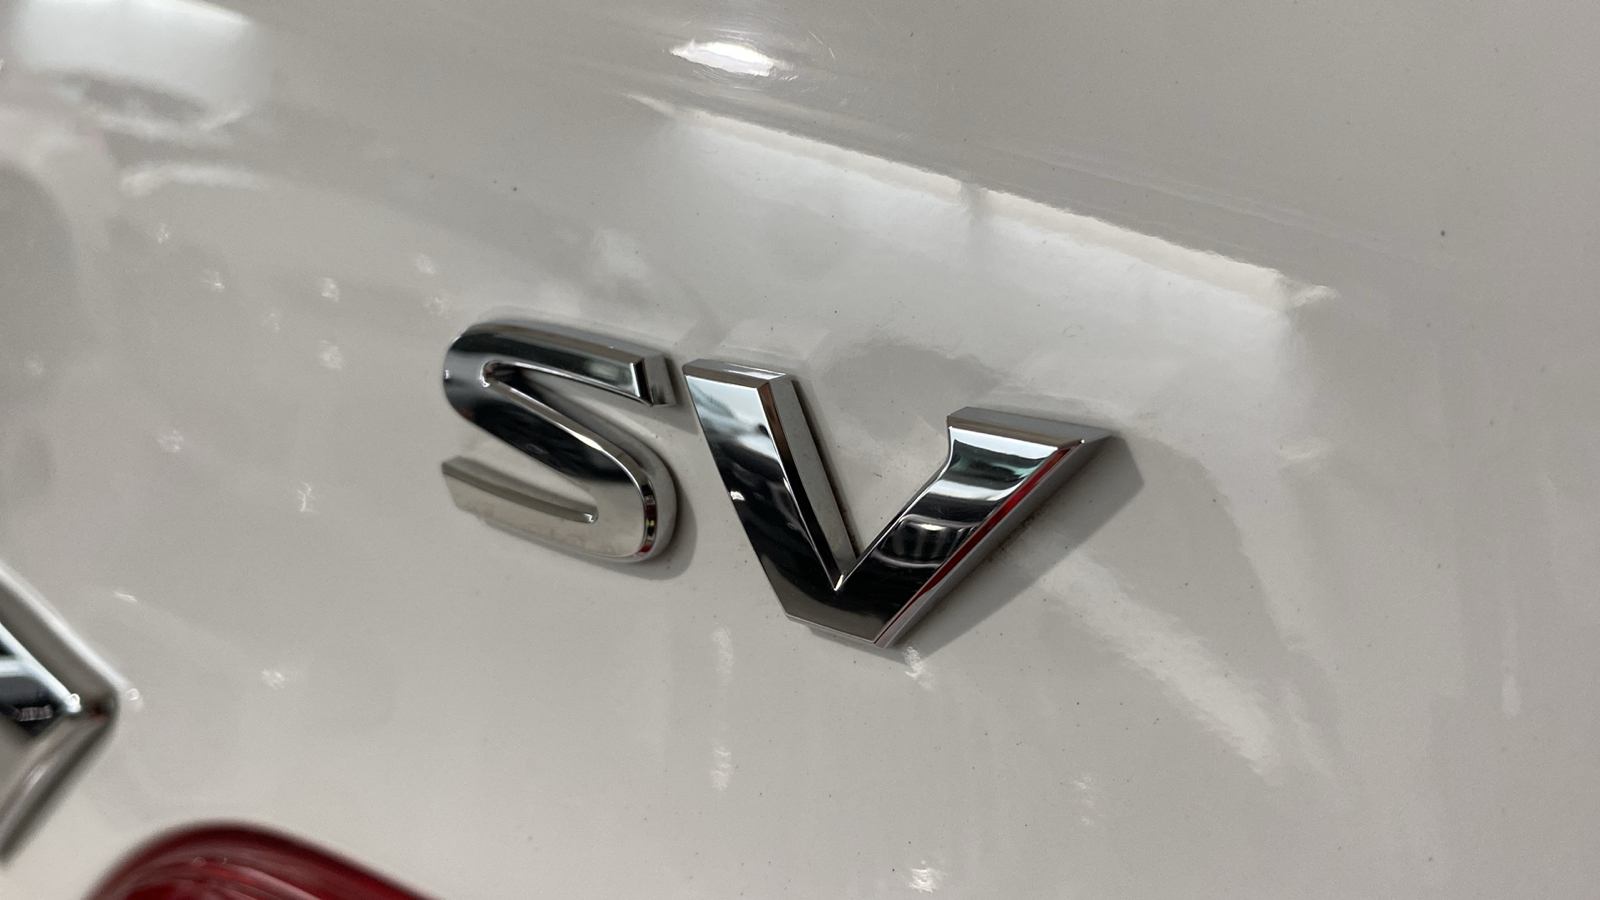 2019 Nissan Sentra SV 9